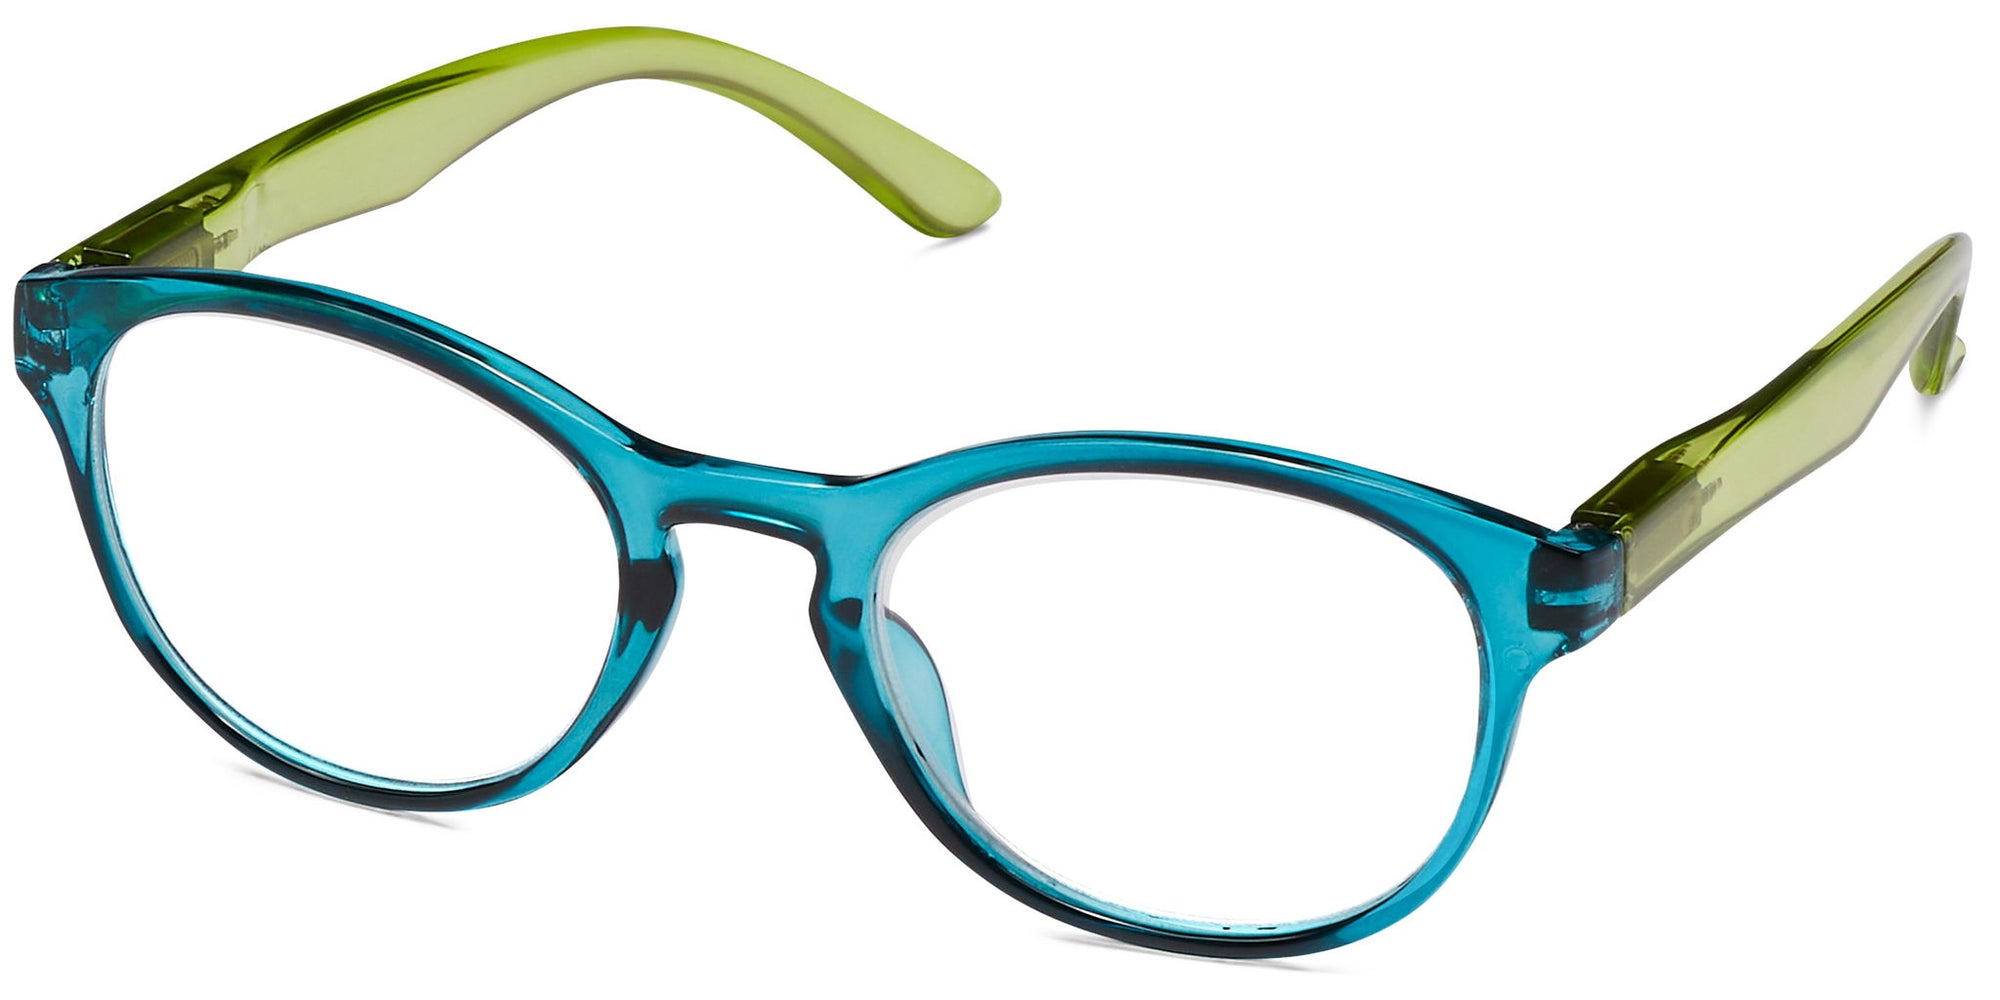 Micaela - Teal/Green / 1.25 - Reading Glasses